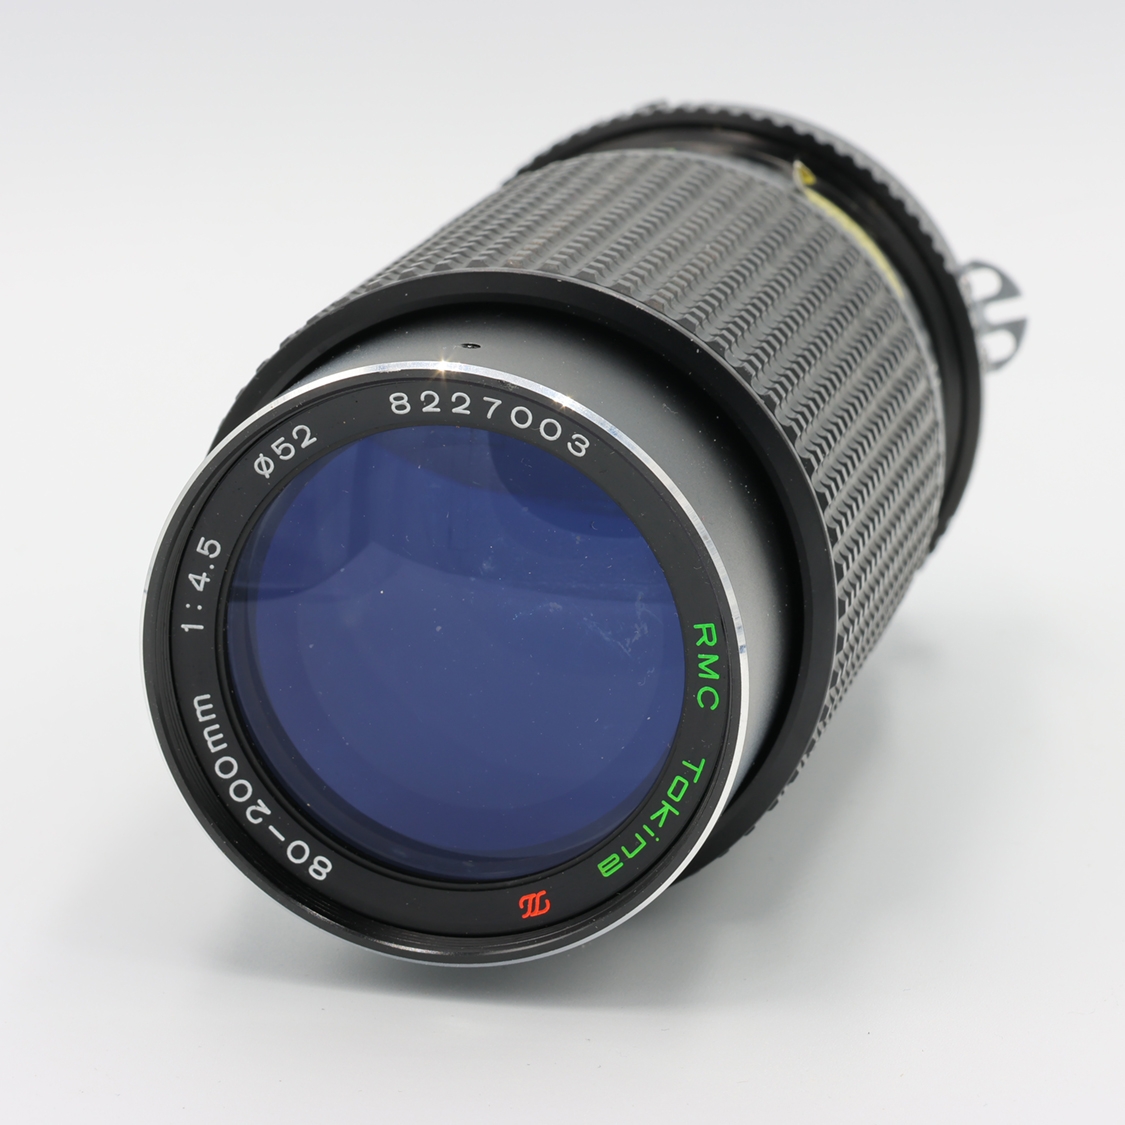 Tokina 80-200mm F4.5 RMC (BGN) Used Lens for Nikon F Mount